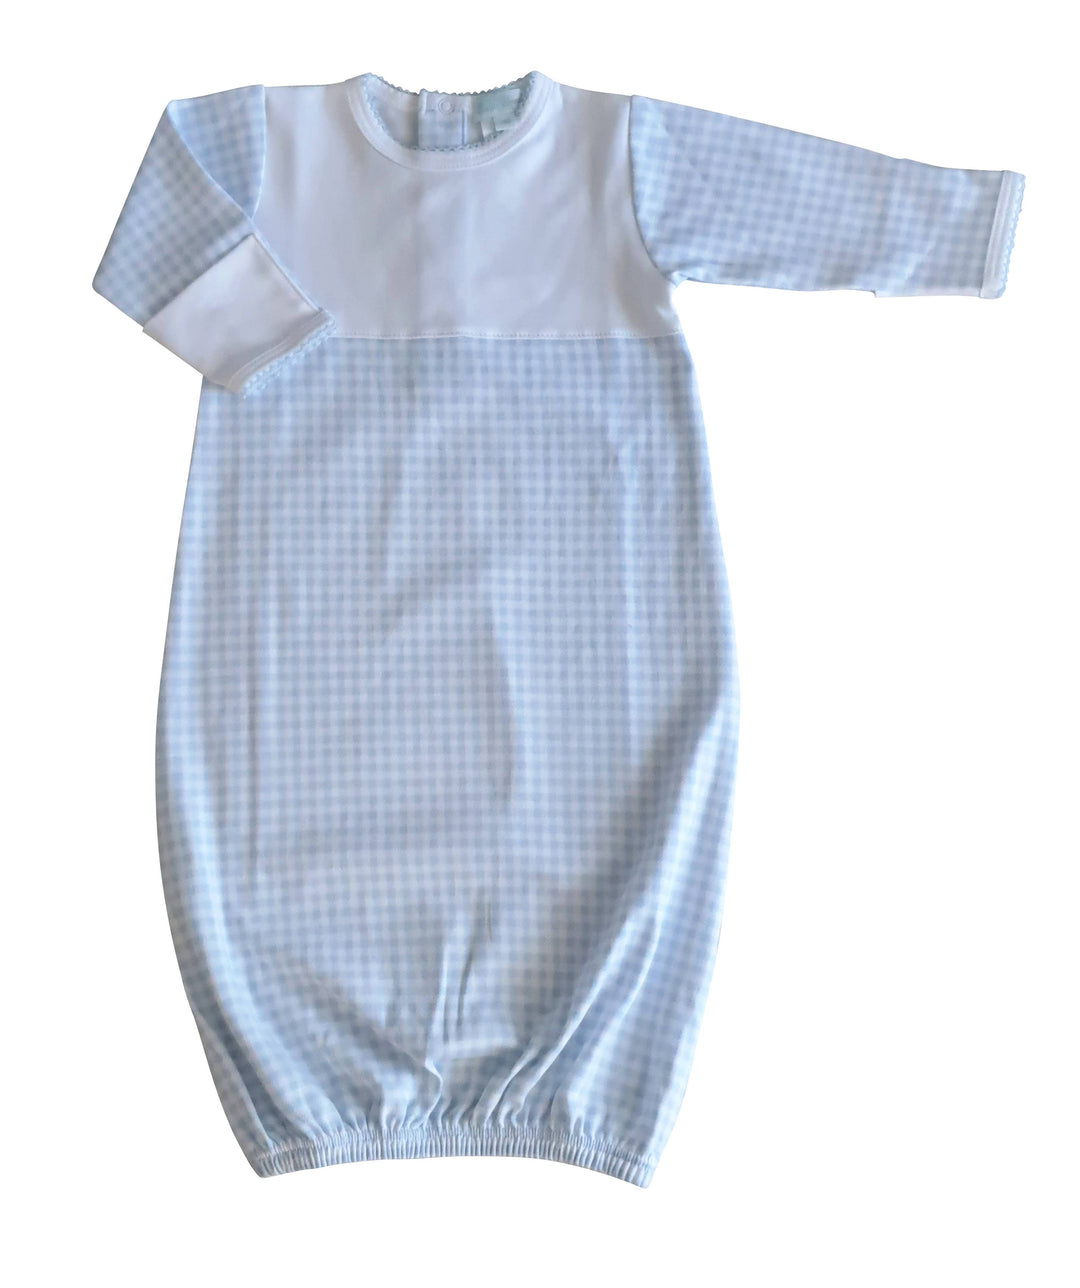 Baby Boy's "Blue Checks" Gown